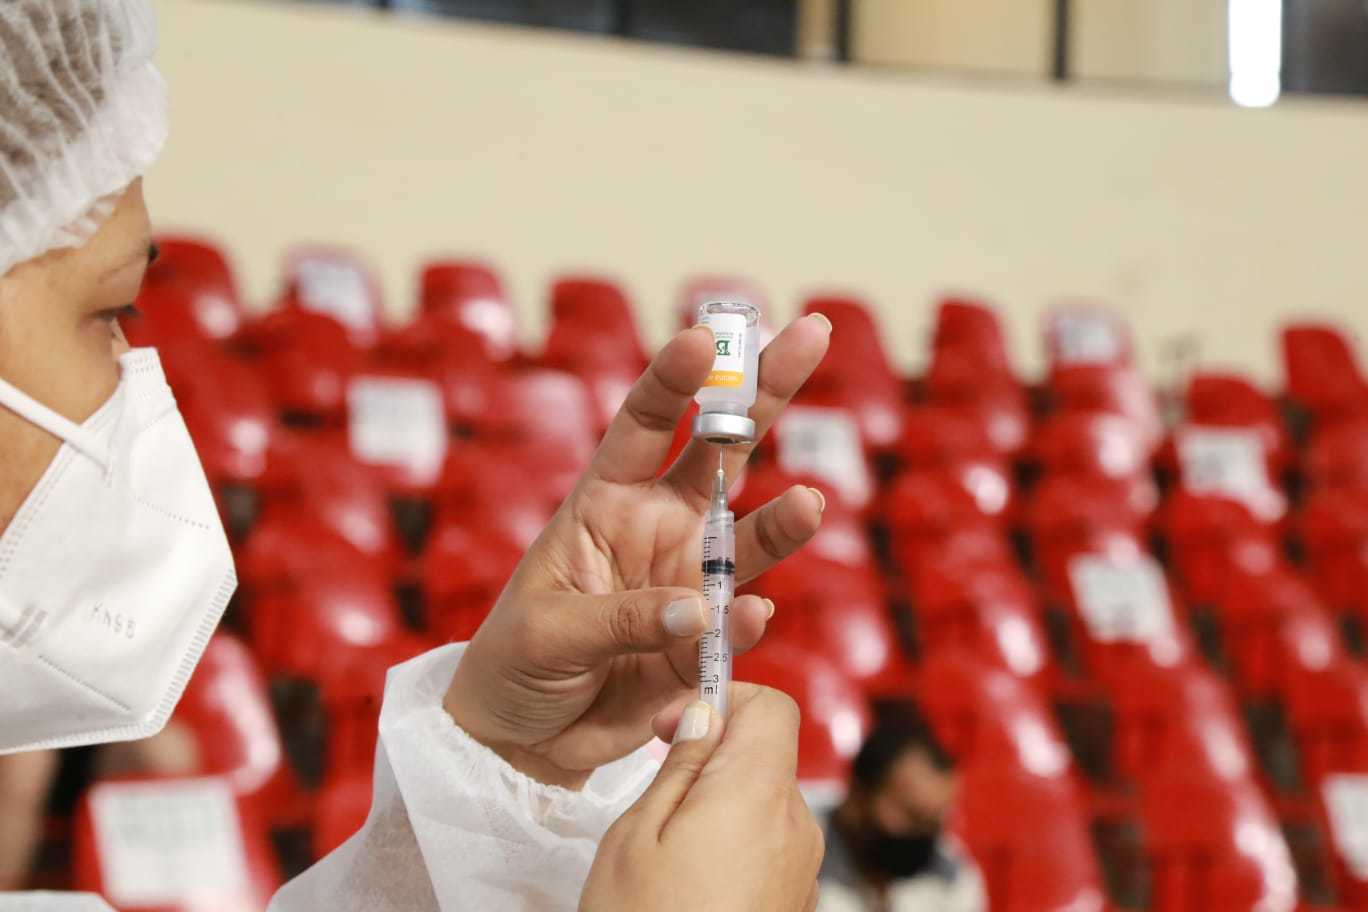 Profissional de saúde prepara dose de vacina para ser aplicada (Foto: Kísie Ainoã)